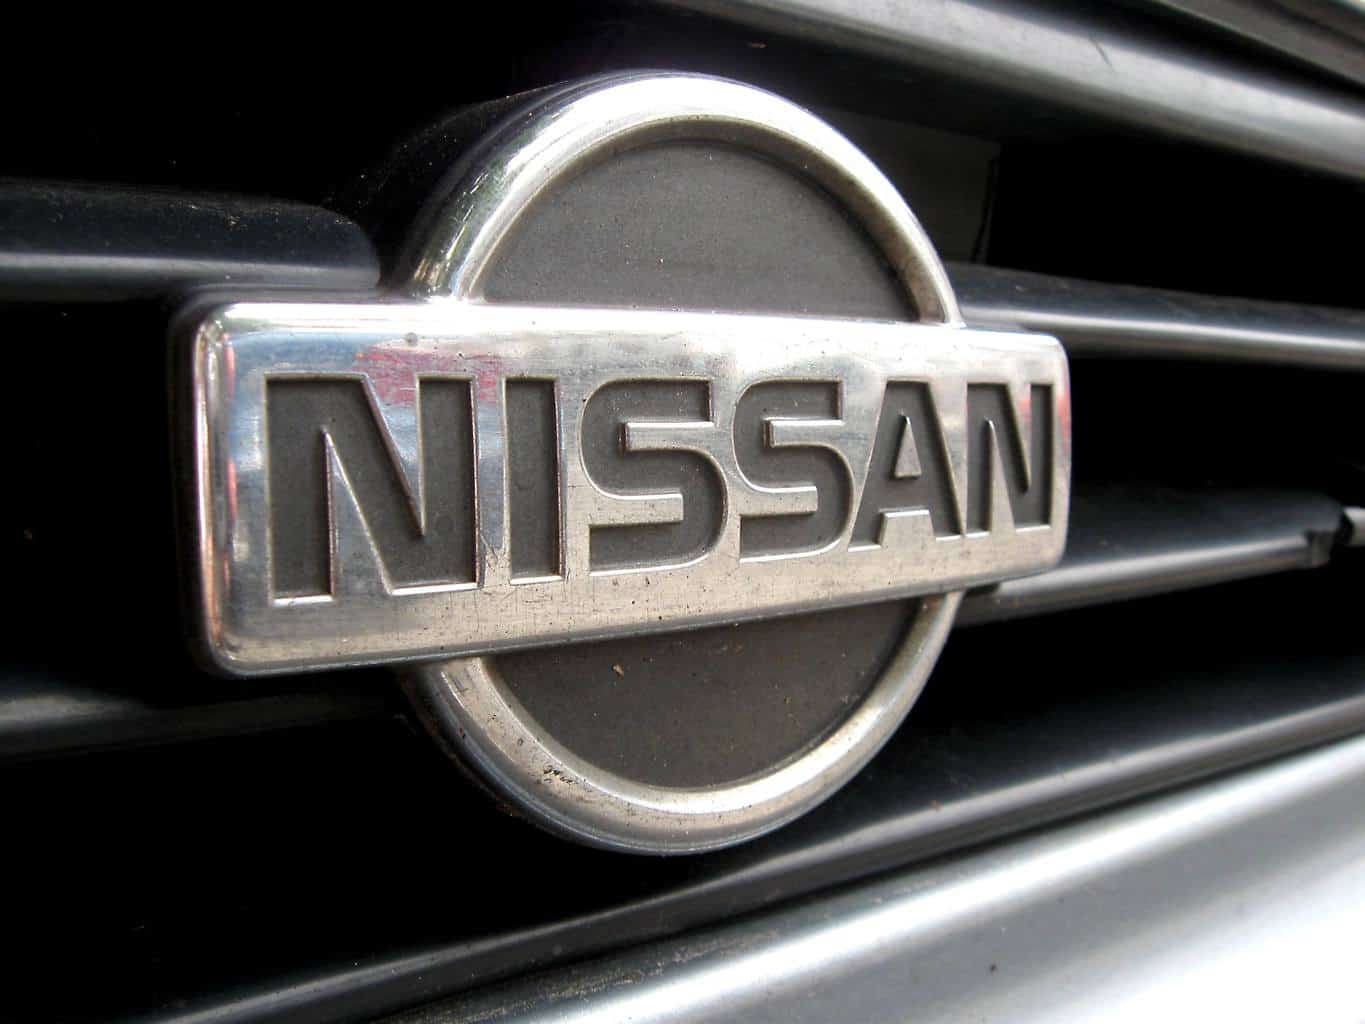 Nissan Title Loans Title Loans on Nissan vehicles